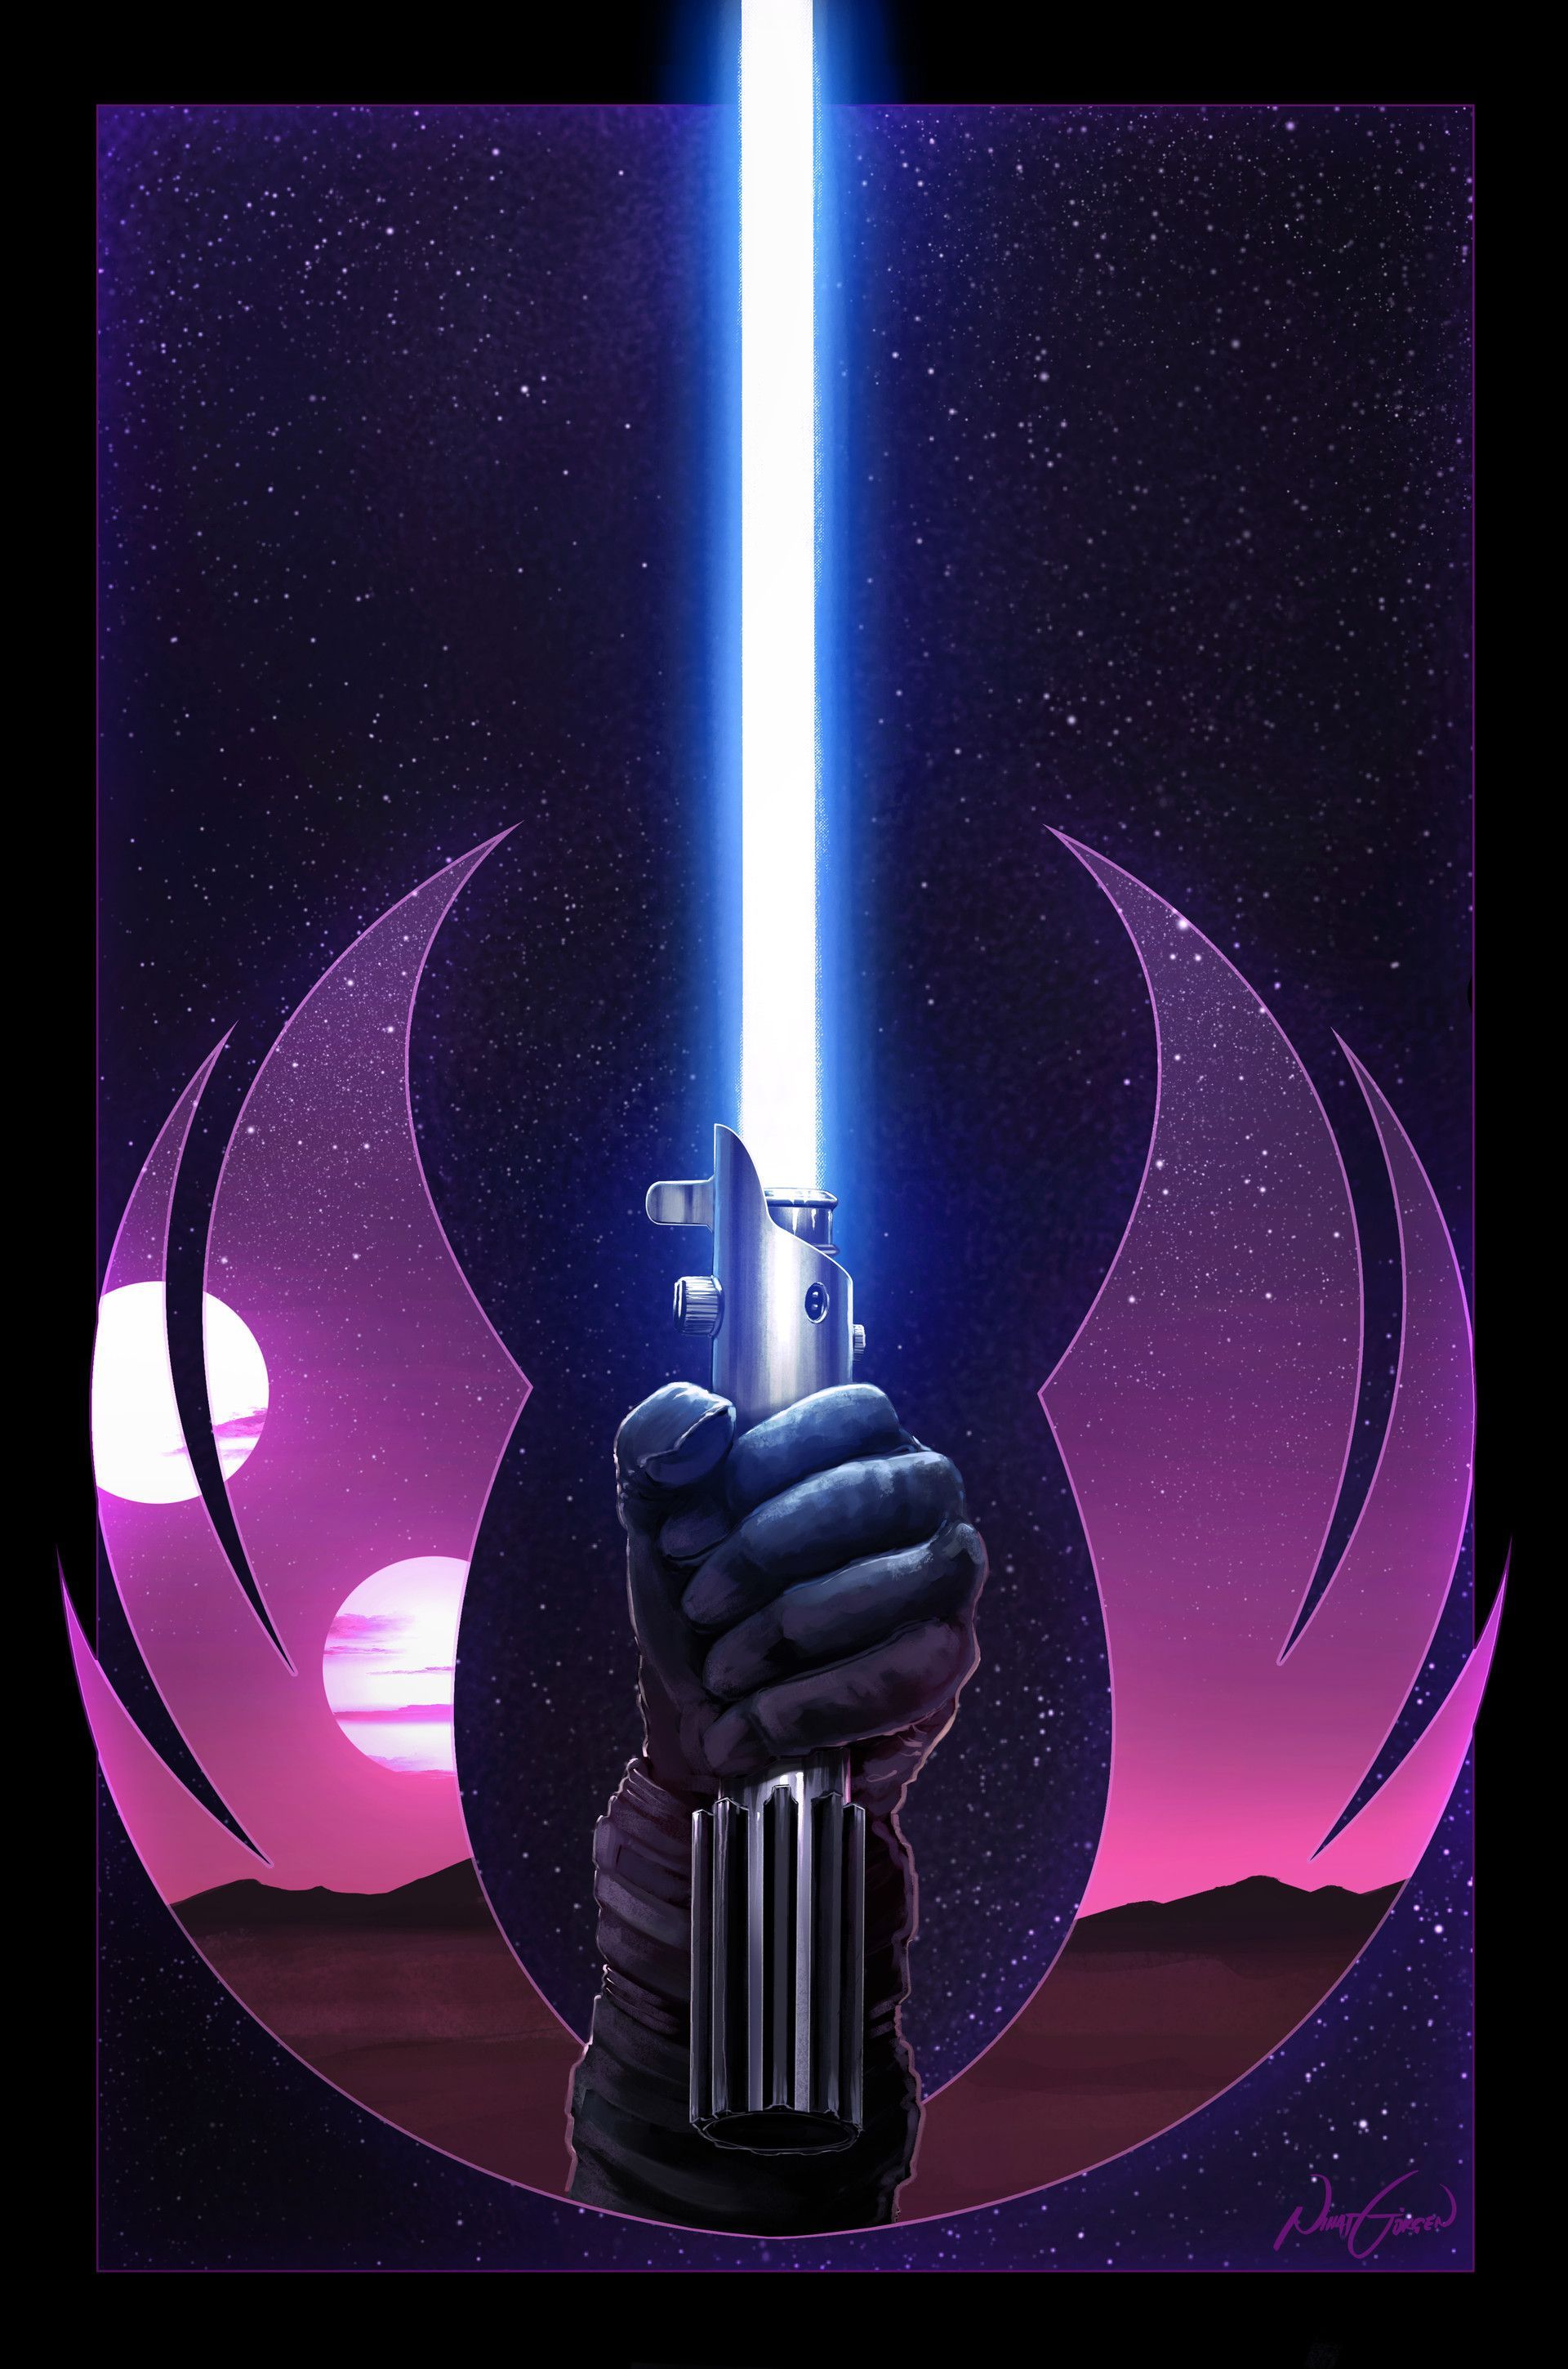 Anakin Skywalker Symbol, Nihat Gokcen. Star wars wallpaper, Star wars drawings, Star wars background